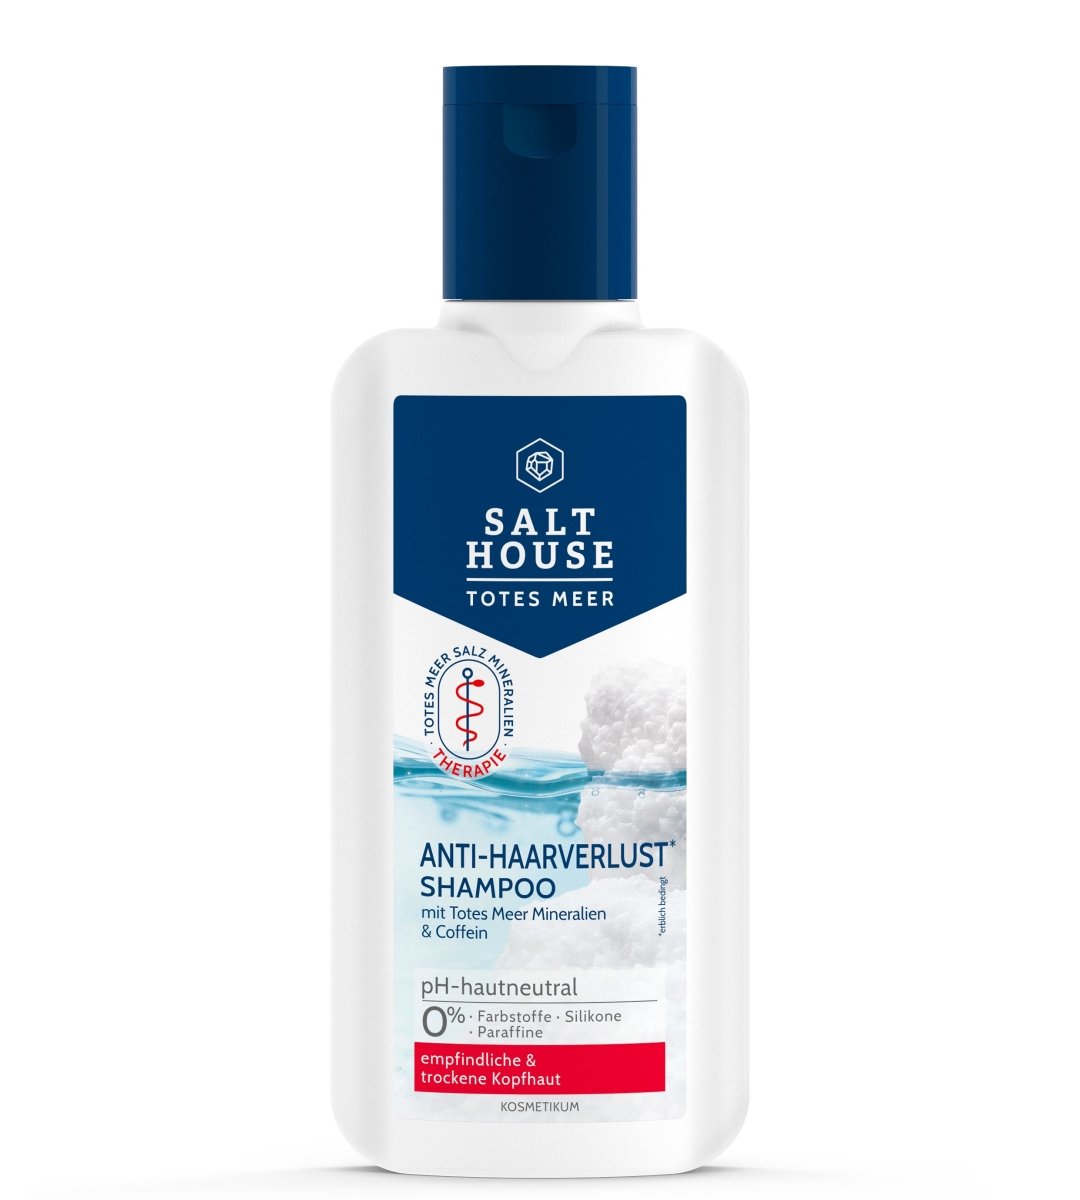 SALTHOUSE® Original Totes Meer Therapie | Shampoo | Anti-Haarverlust | 250 ml